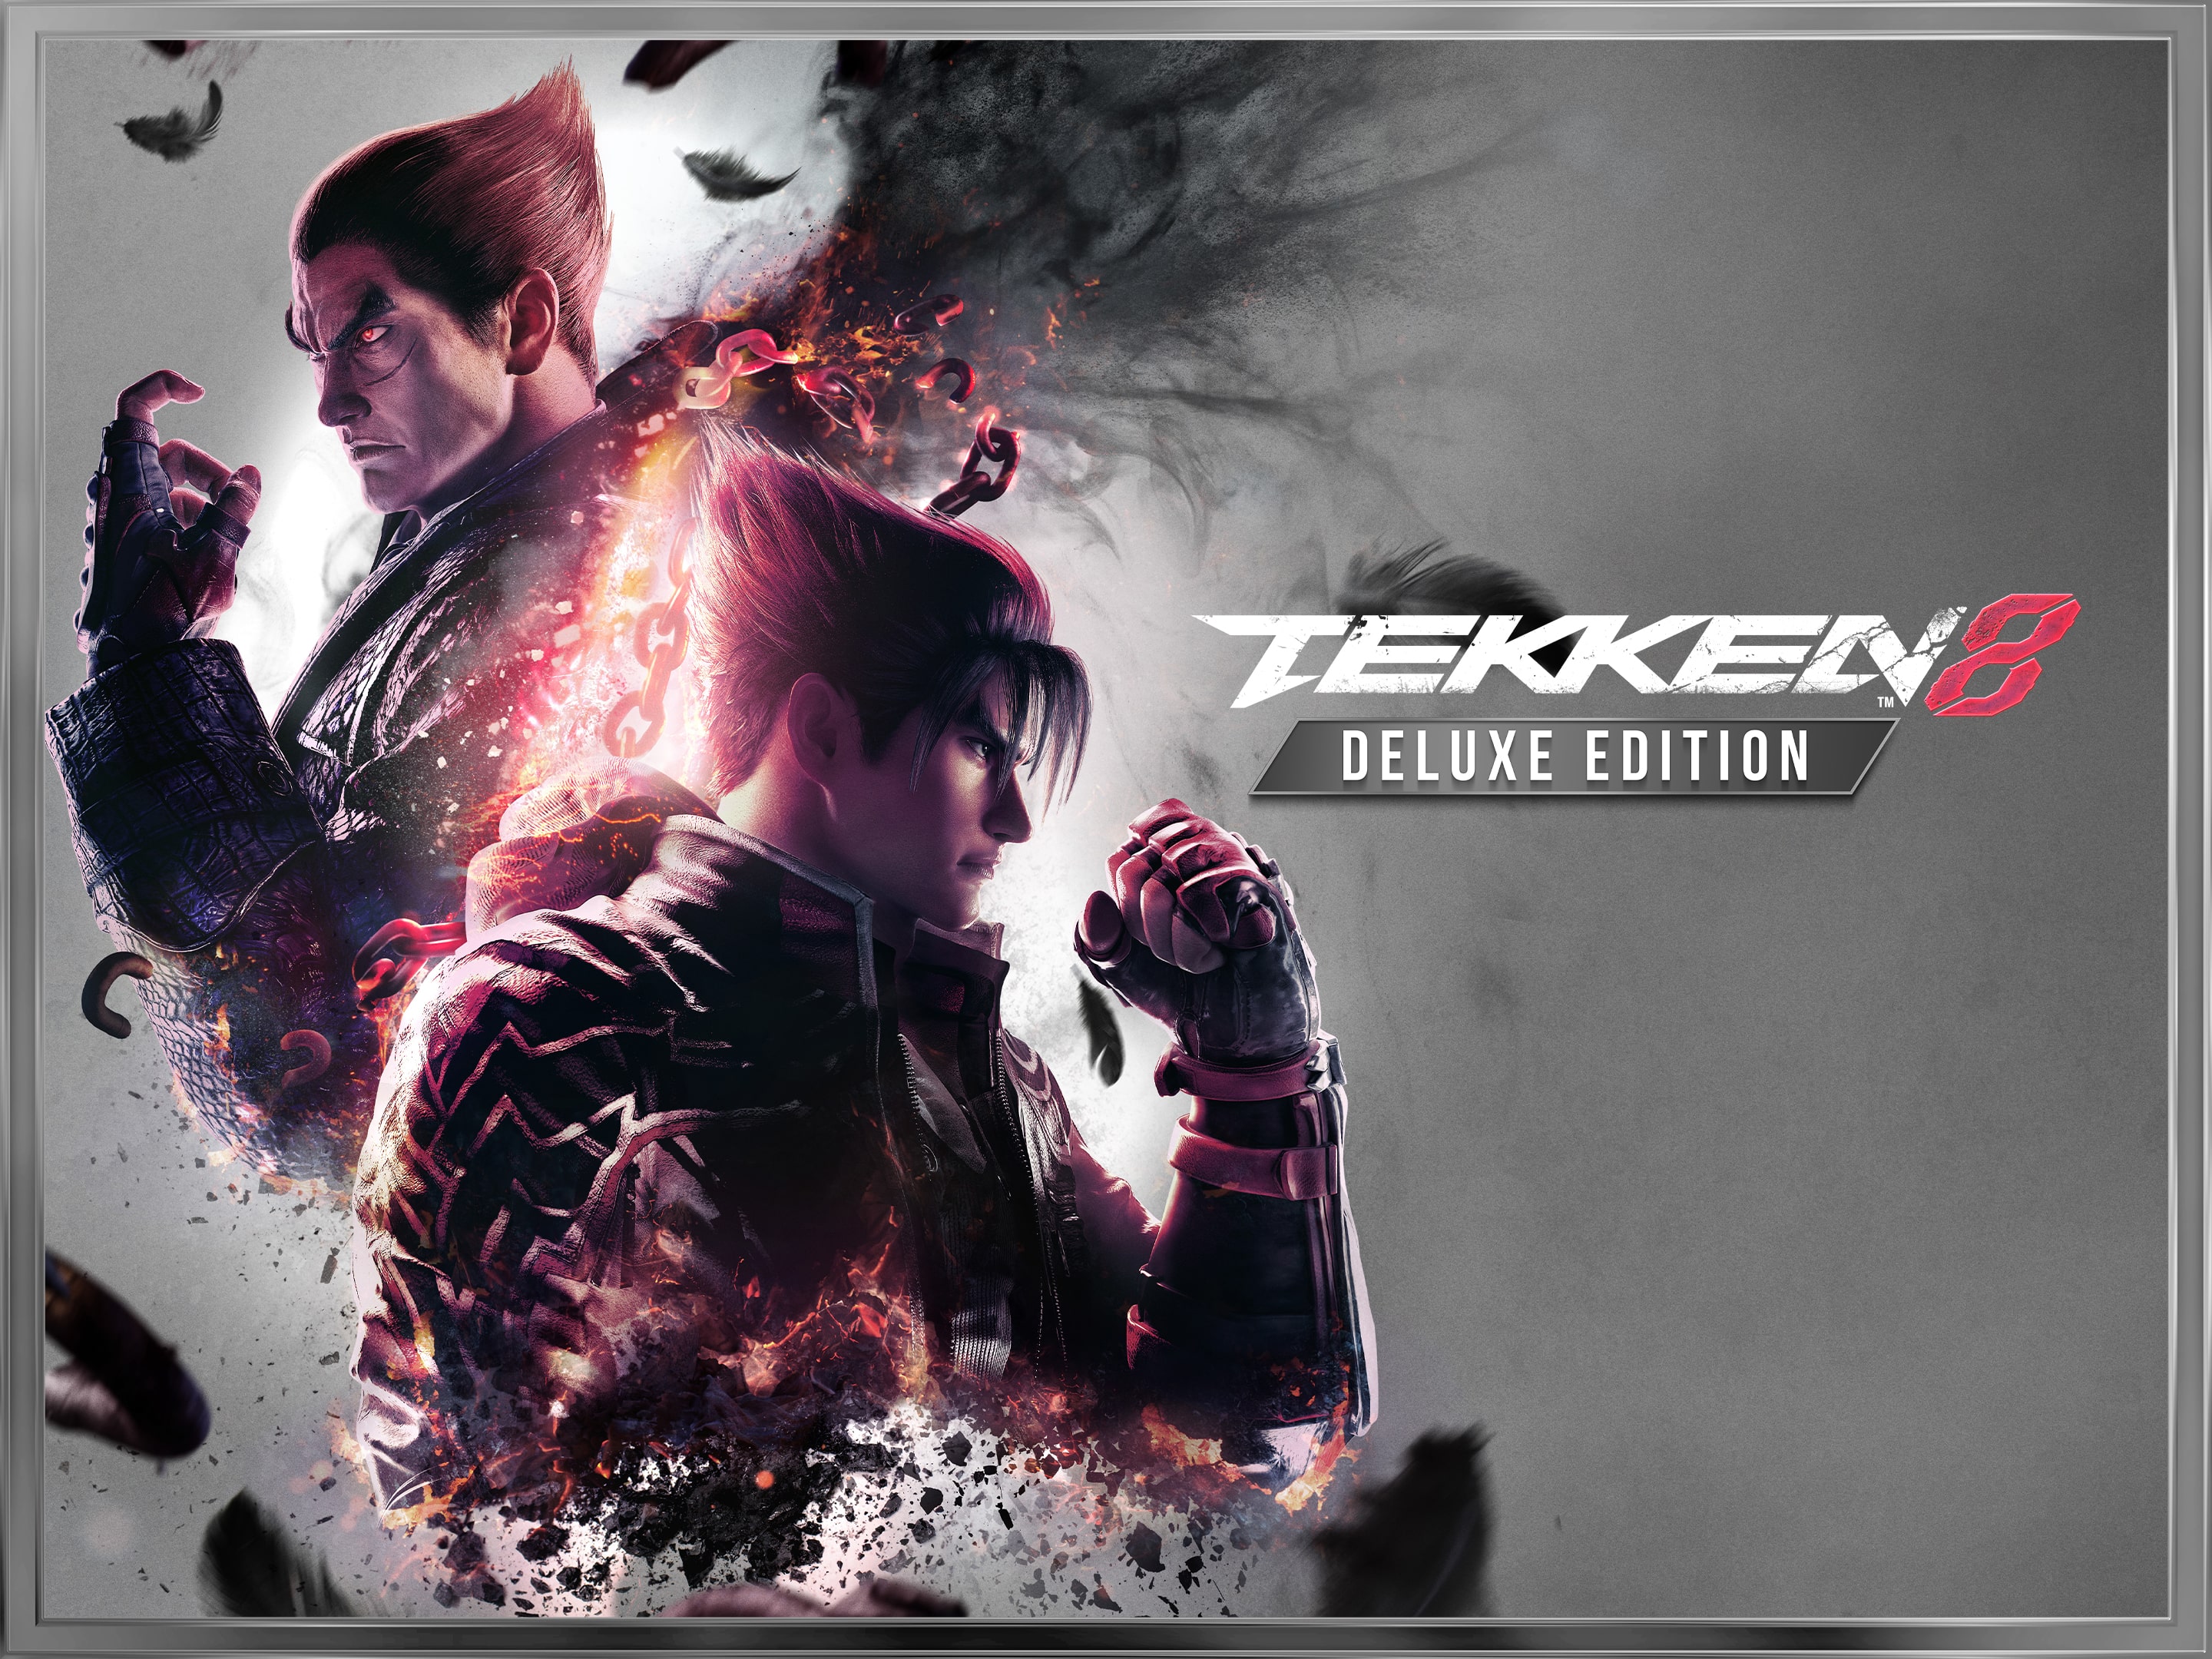 Bandai Namco PS5 TEKKEN 8 Premium Collector's Edition Video Game